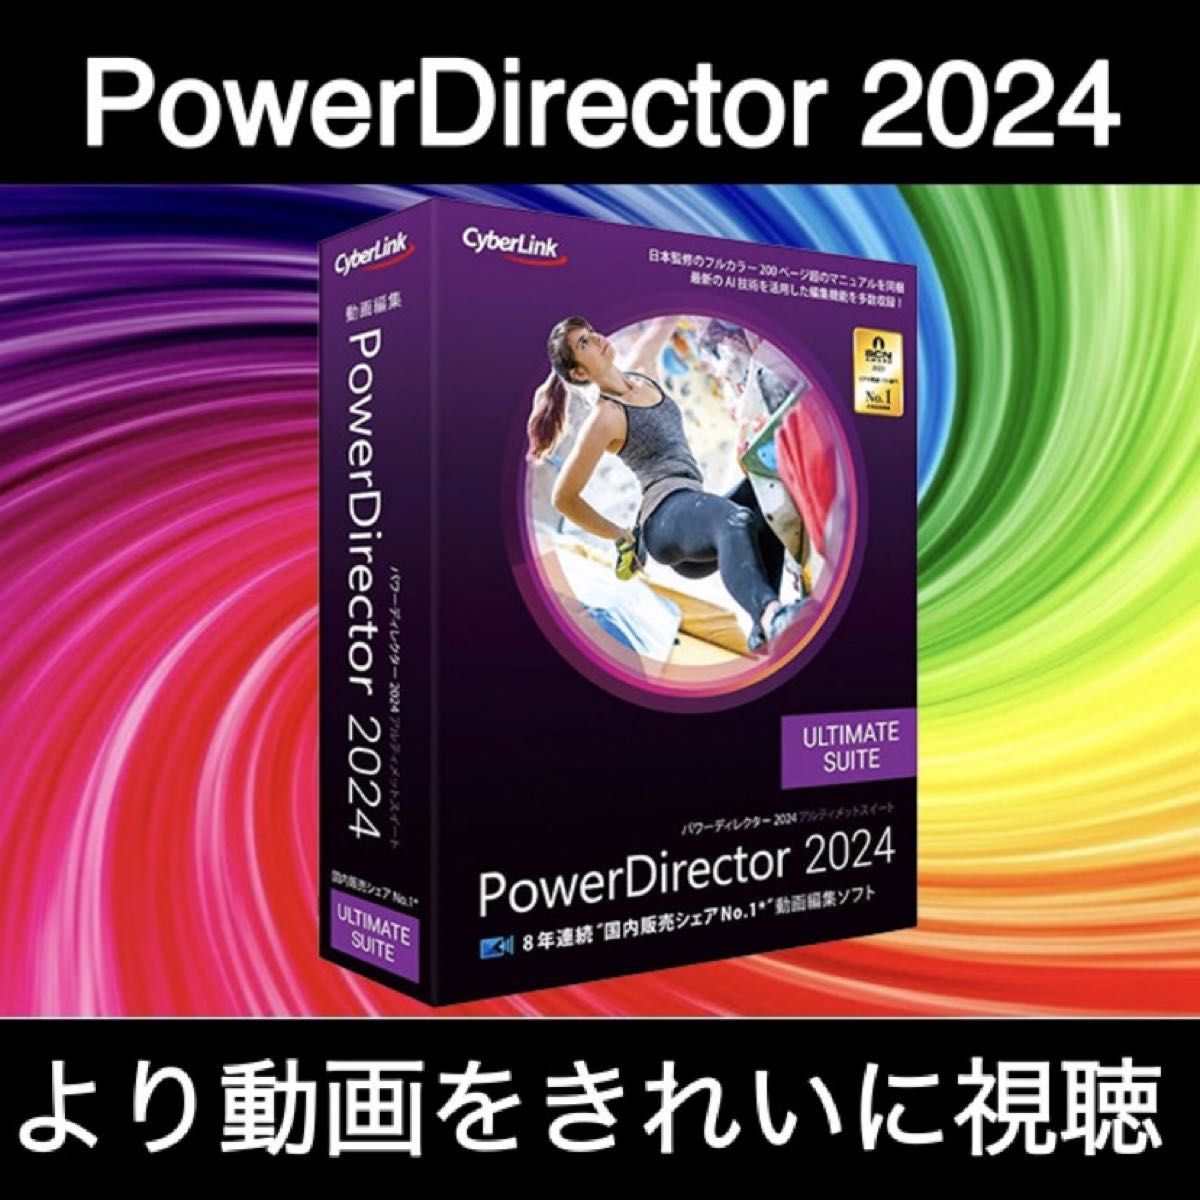 【CyberLink】CyberLink PowerDirector Ultimate 2024Windows版 日本語 